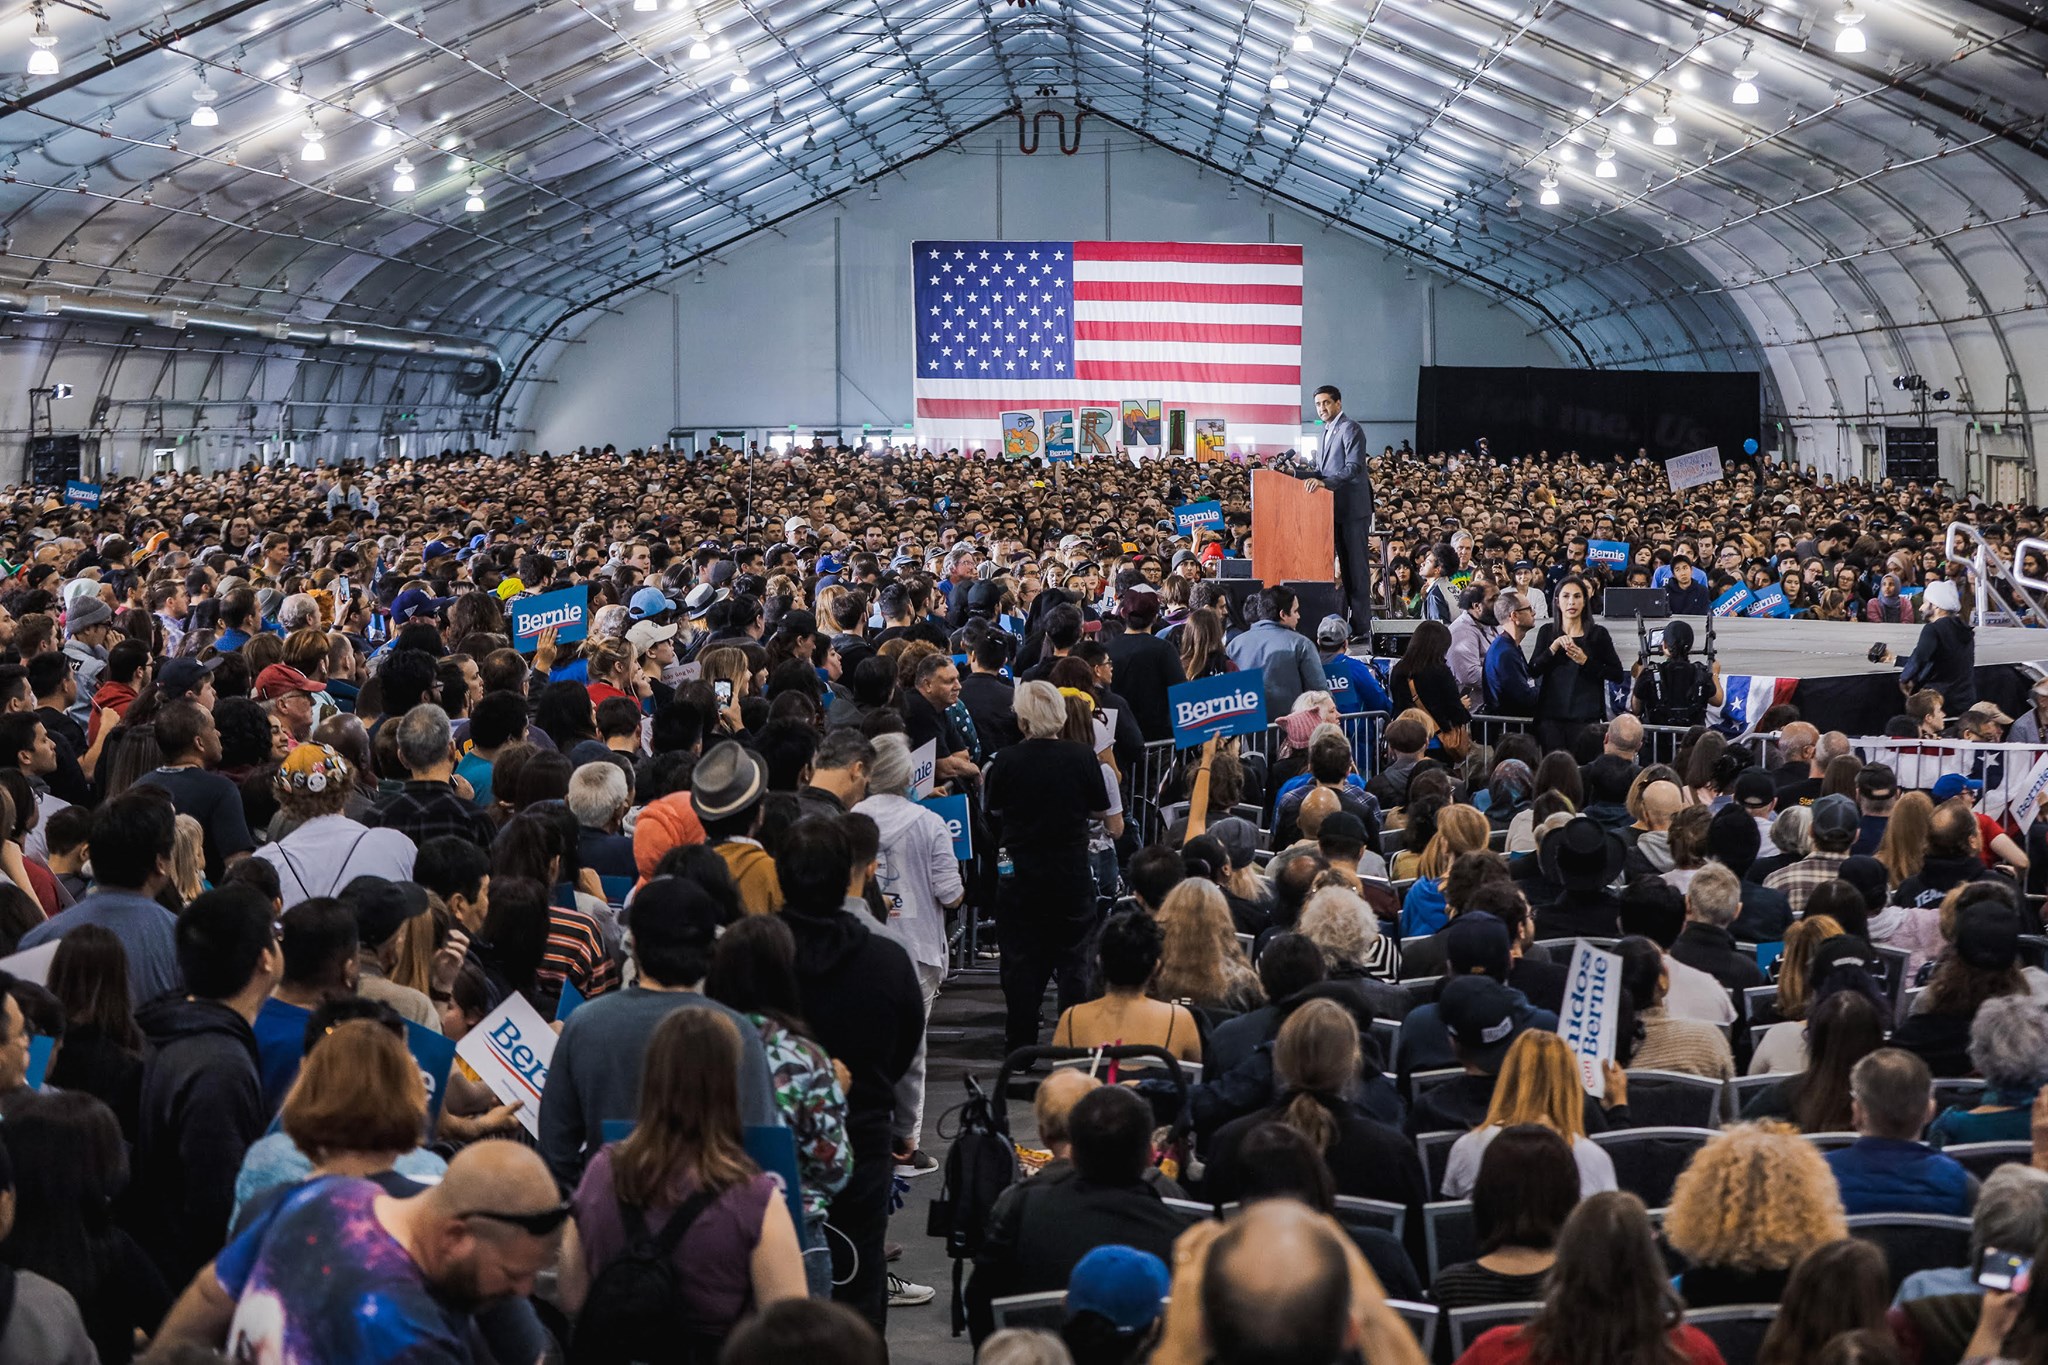 Ro speaking in front of a huge crowd at a Bernie Sanders rally